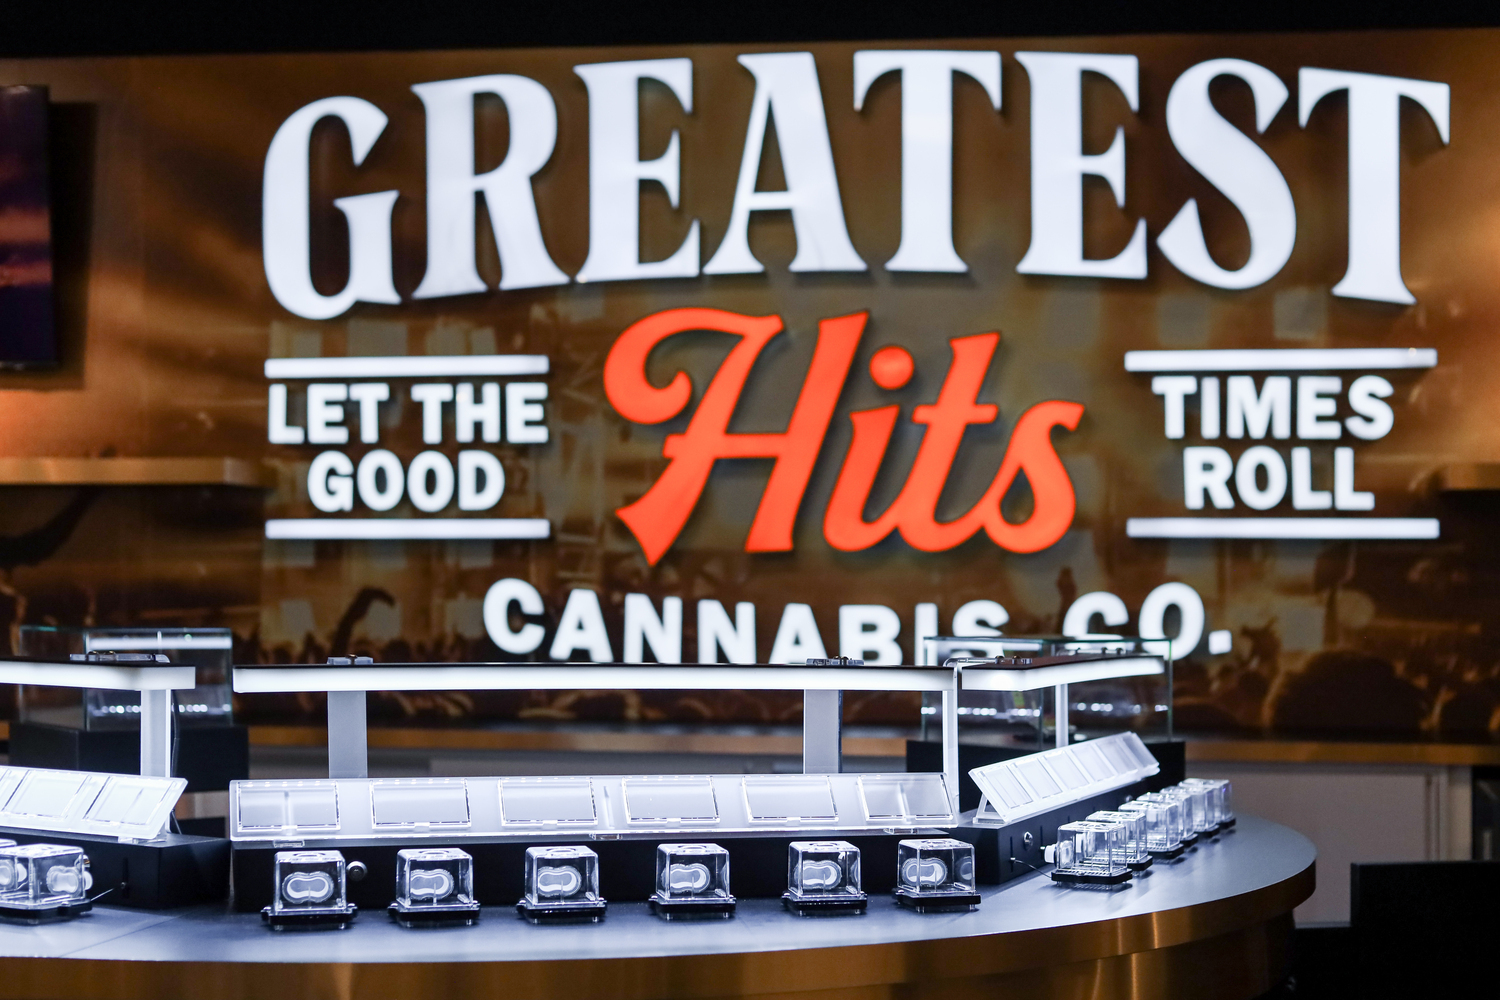 Greatest Hits Cannabis Co Taunton